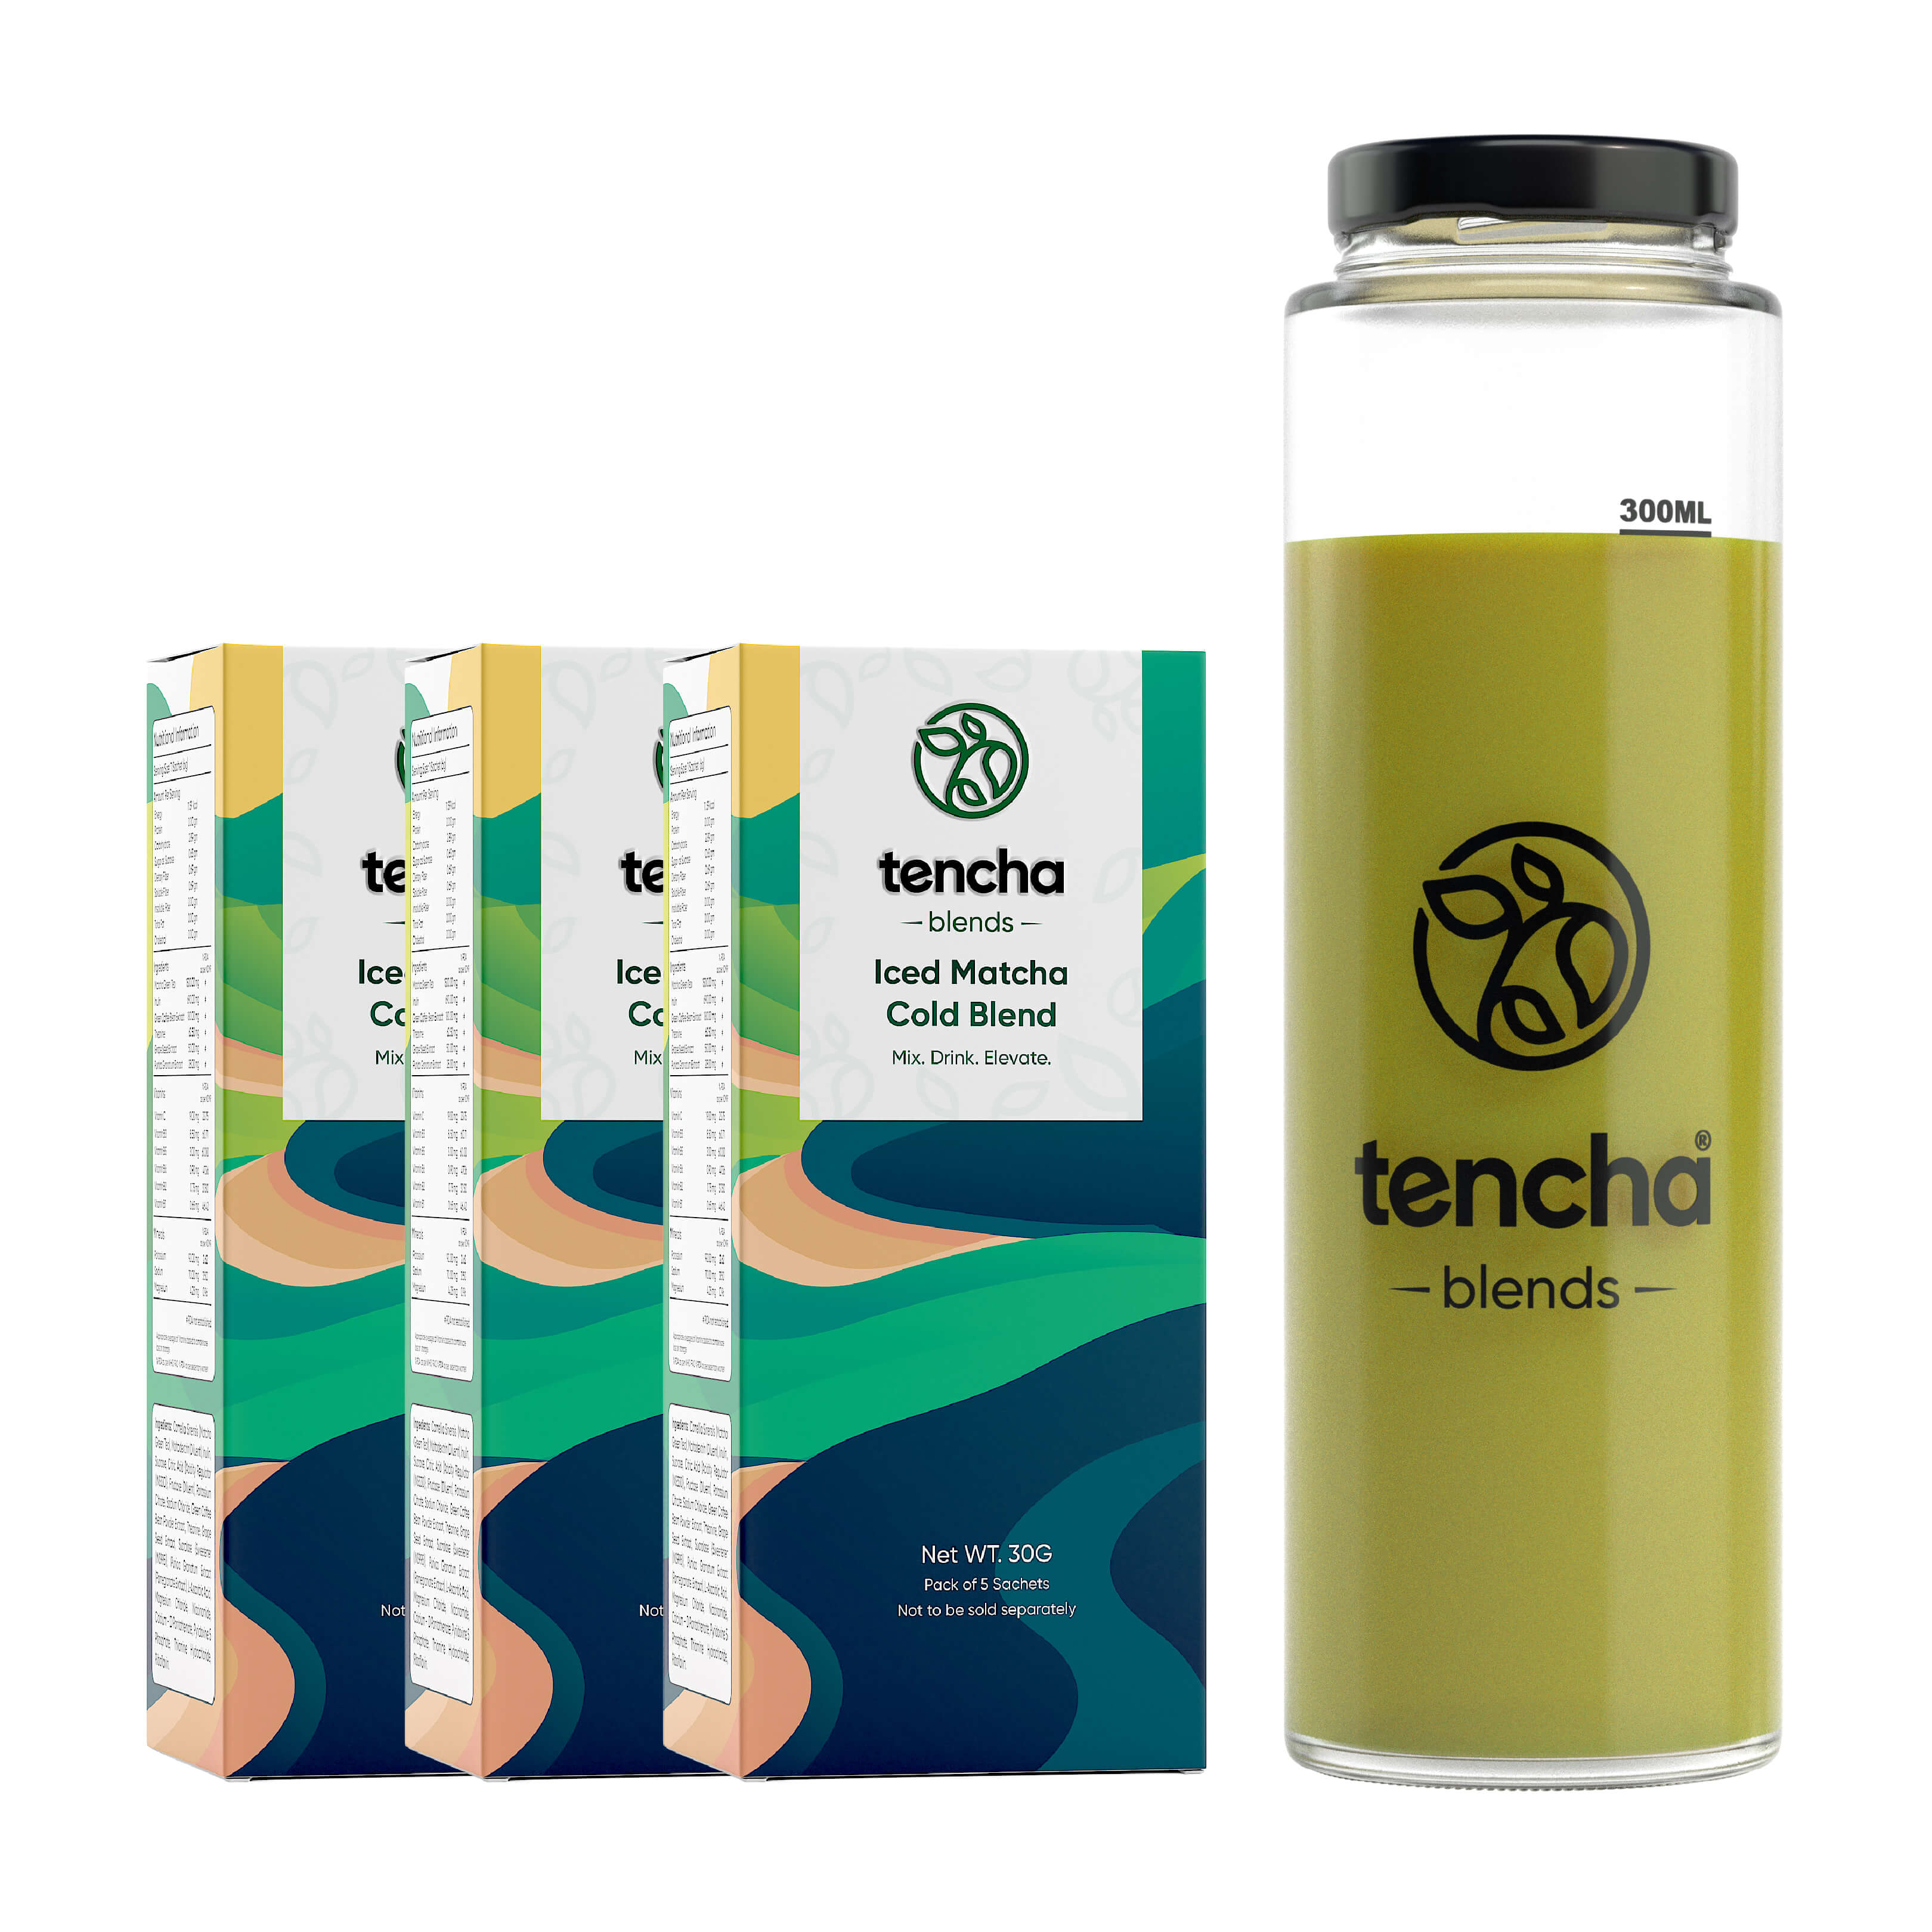 iced matcha mono carton and glass tumbler by Tencha